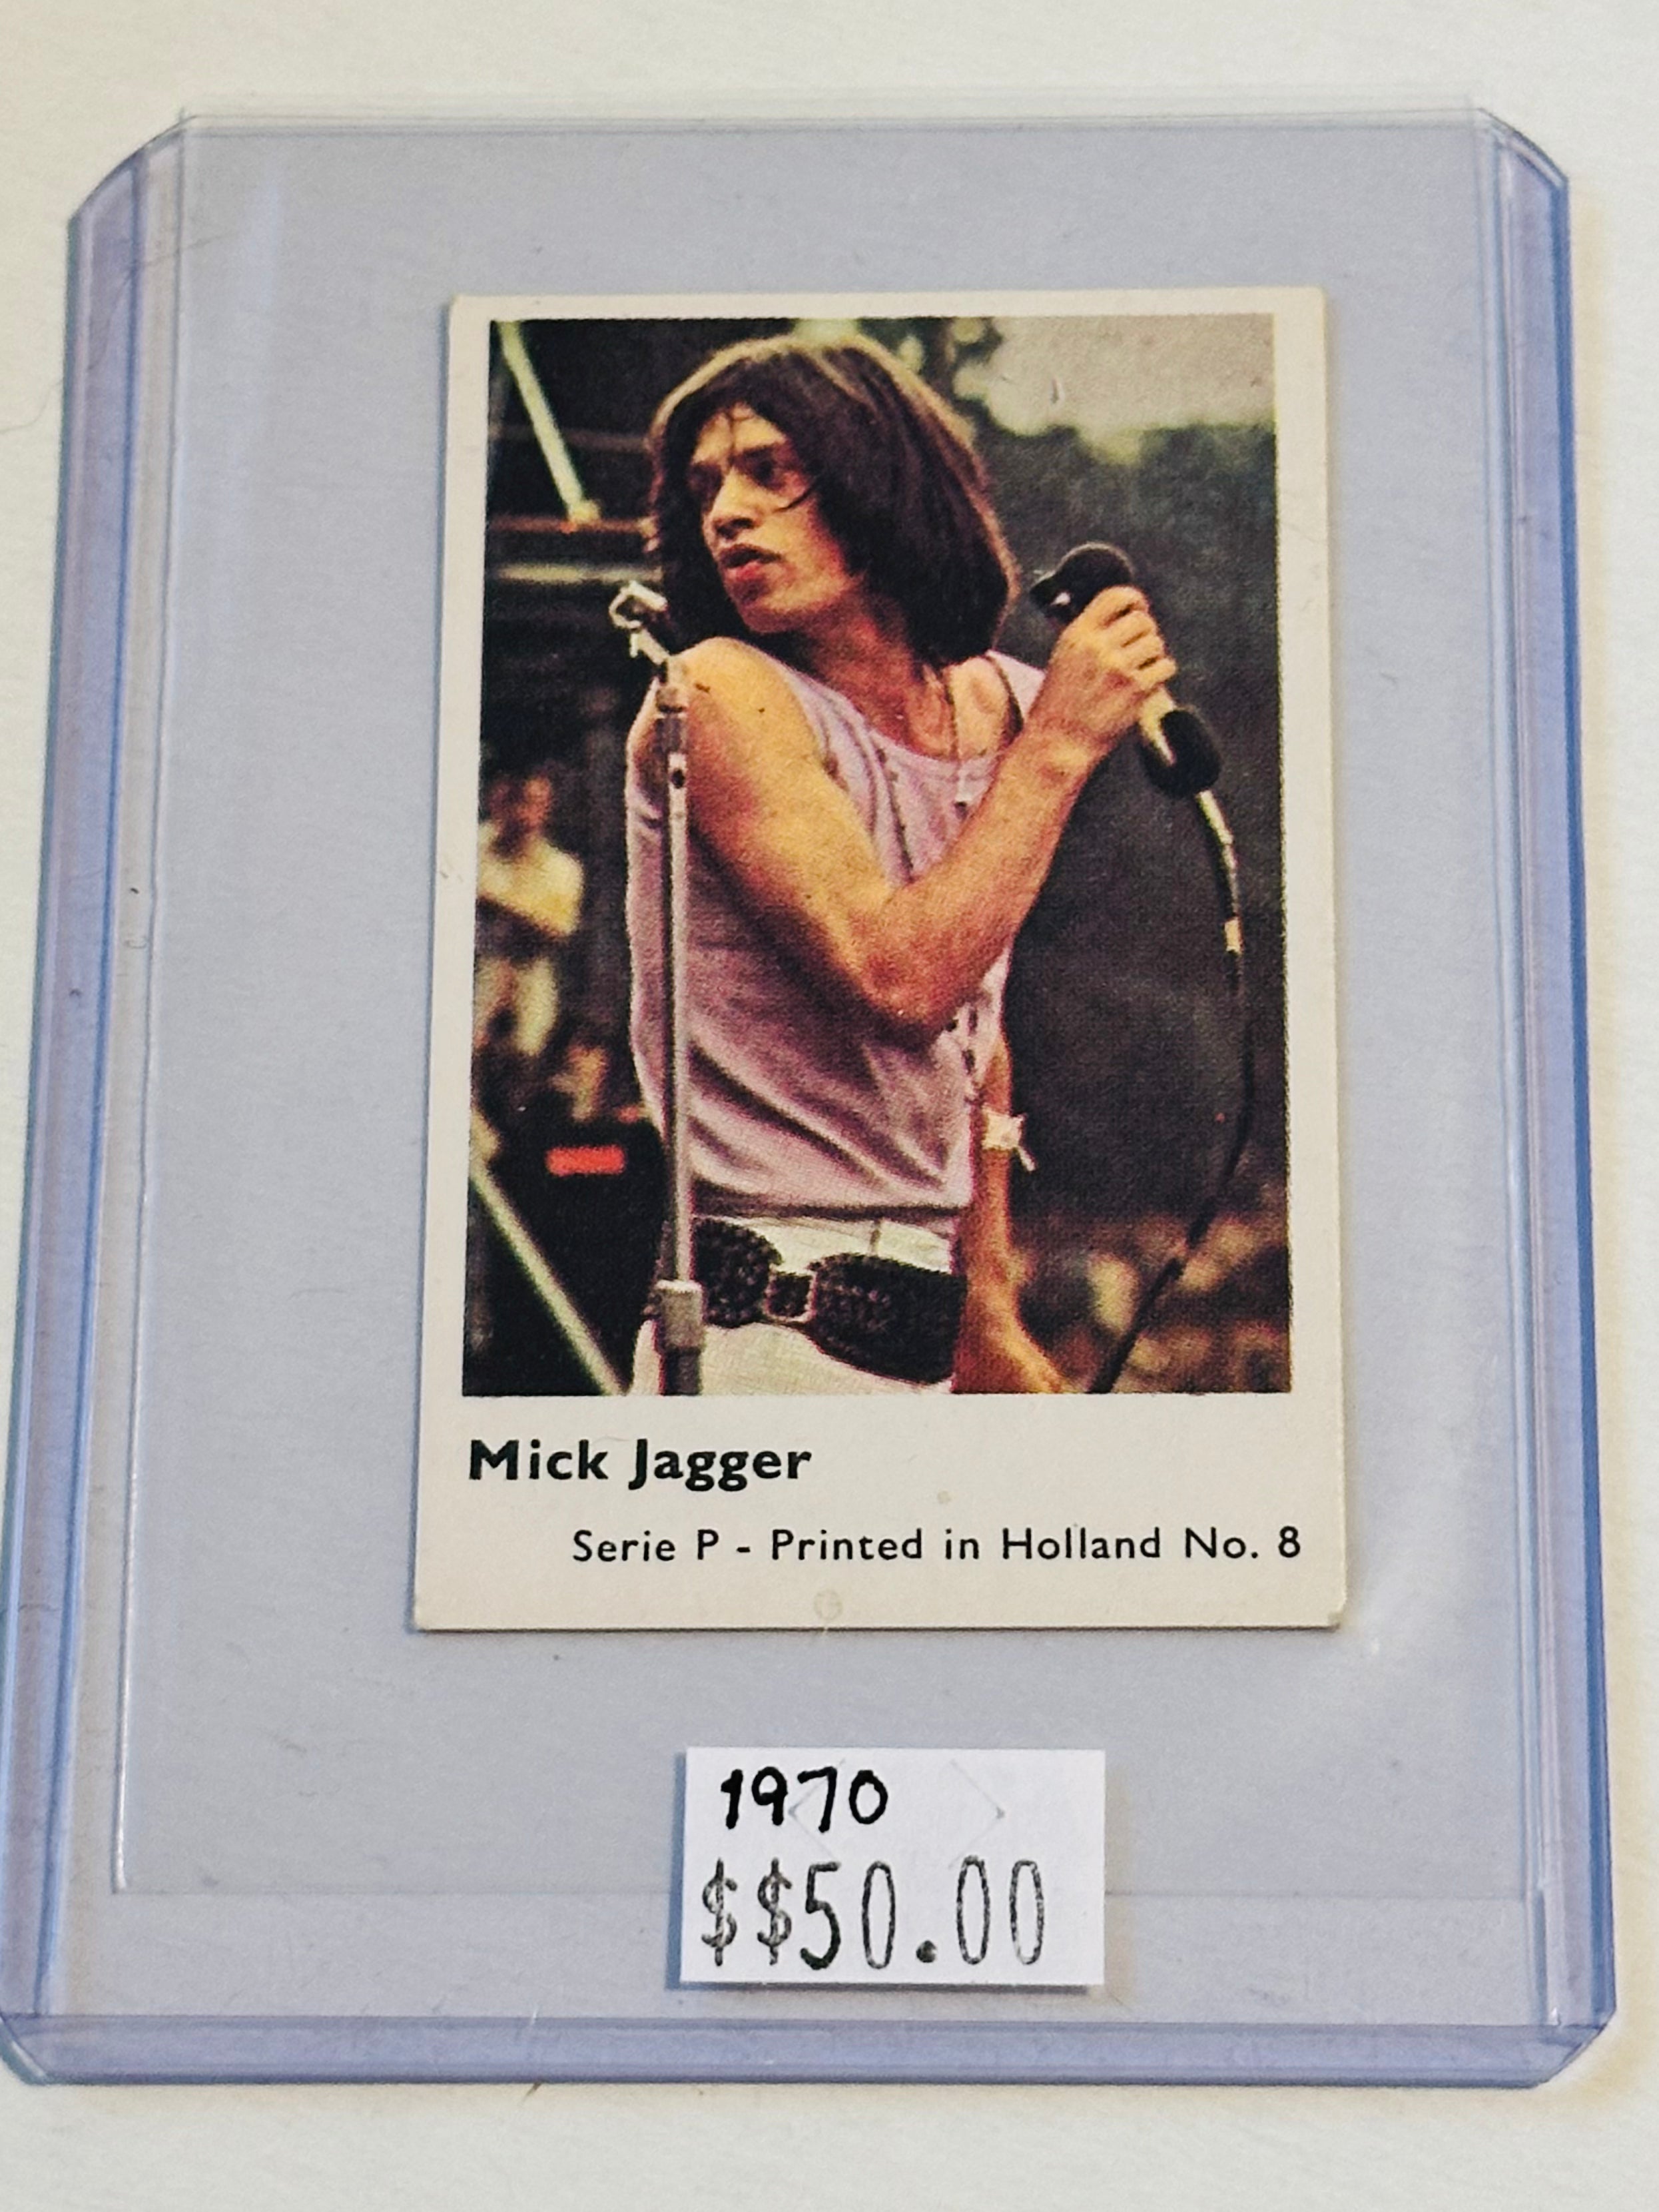 Rolling Stones, Mick Jagger rare concert card, 1970